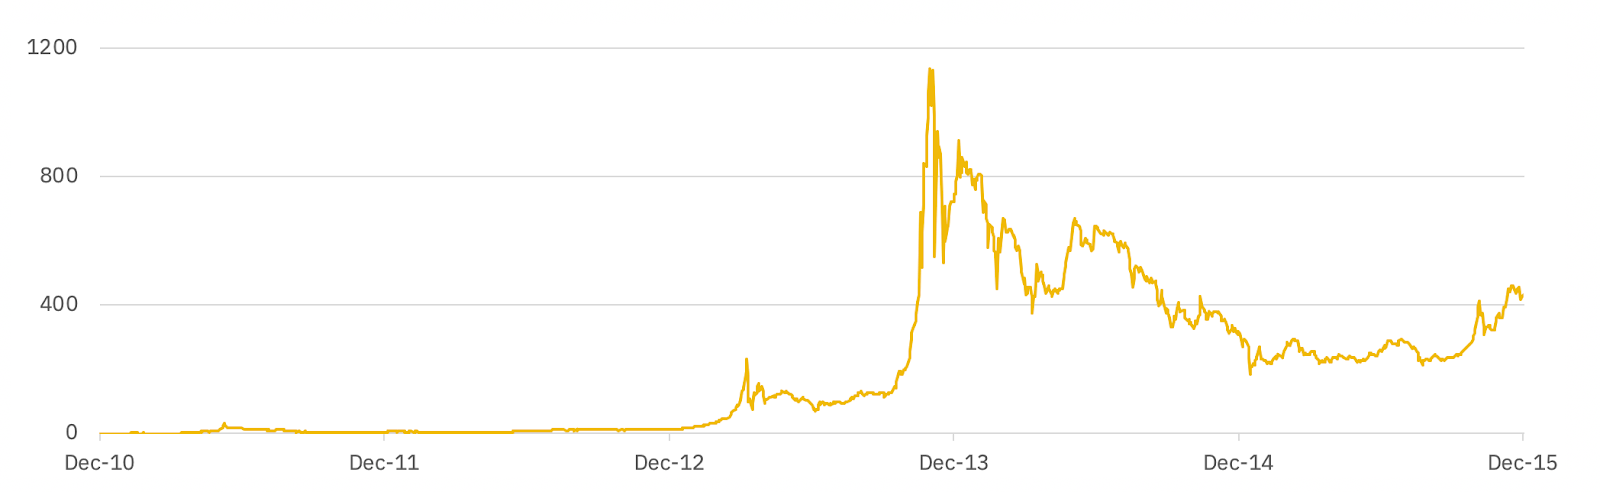 Bitcoin Depth Chart Explained